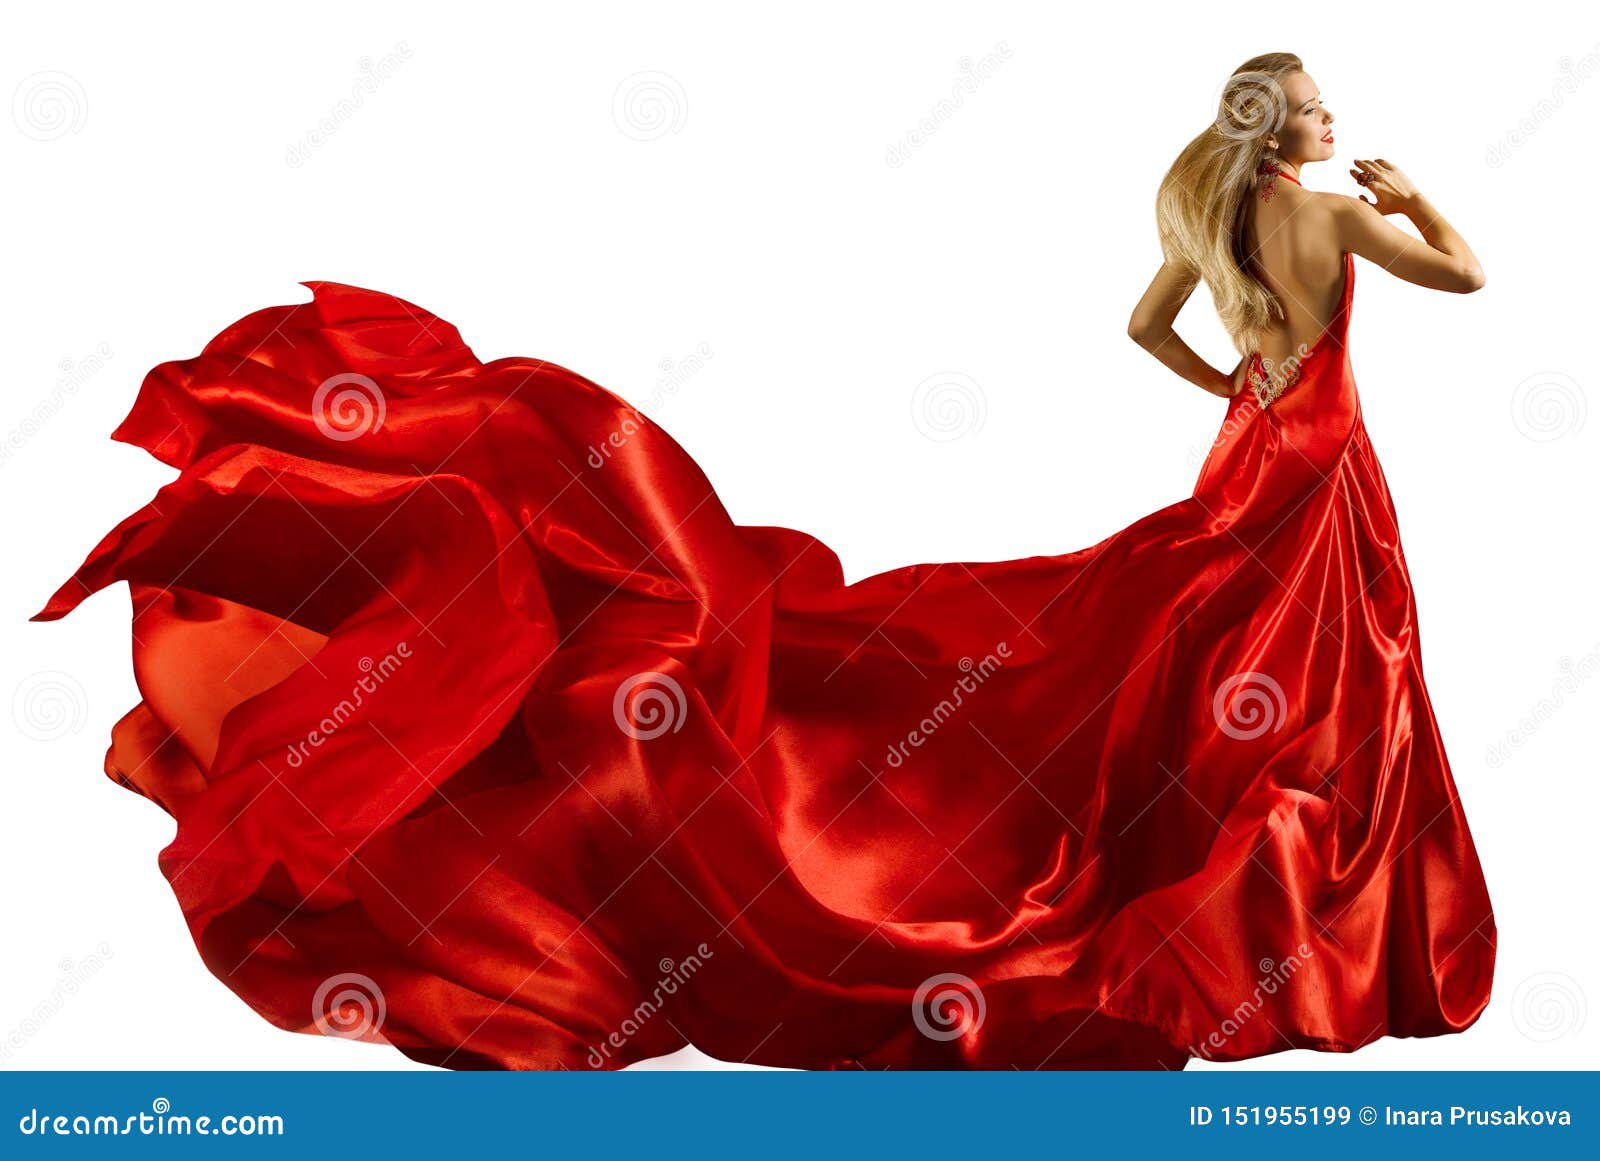 Fashion Model Long Red Dress, Woman in Waving Gown, Full Length Beauty ...